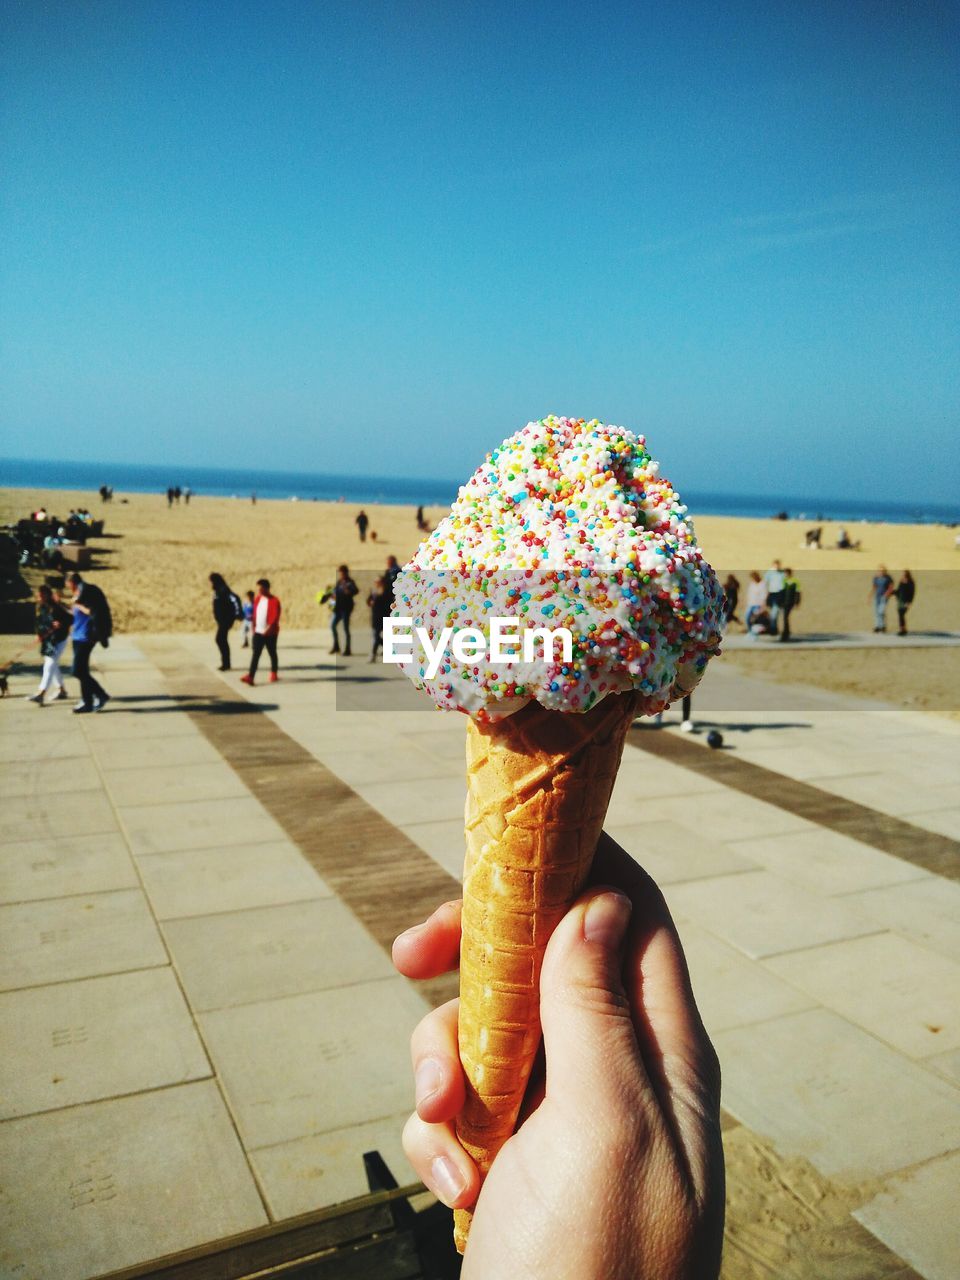 Close-up of hand holding ice cream at beach